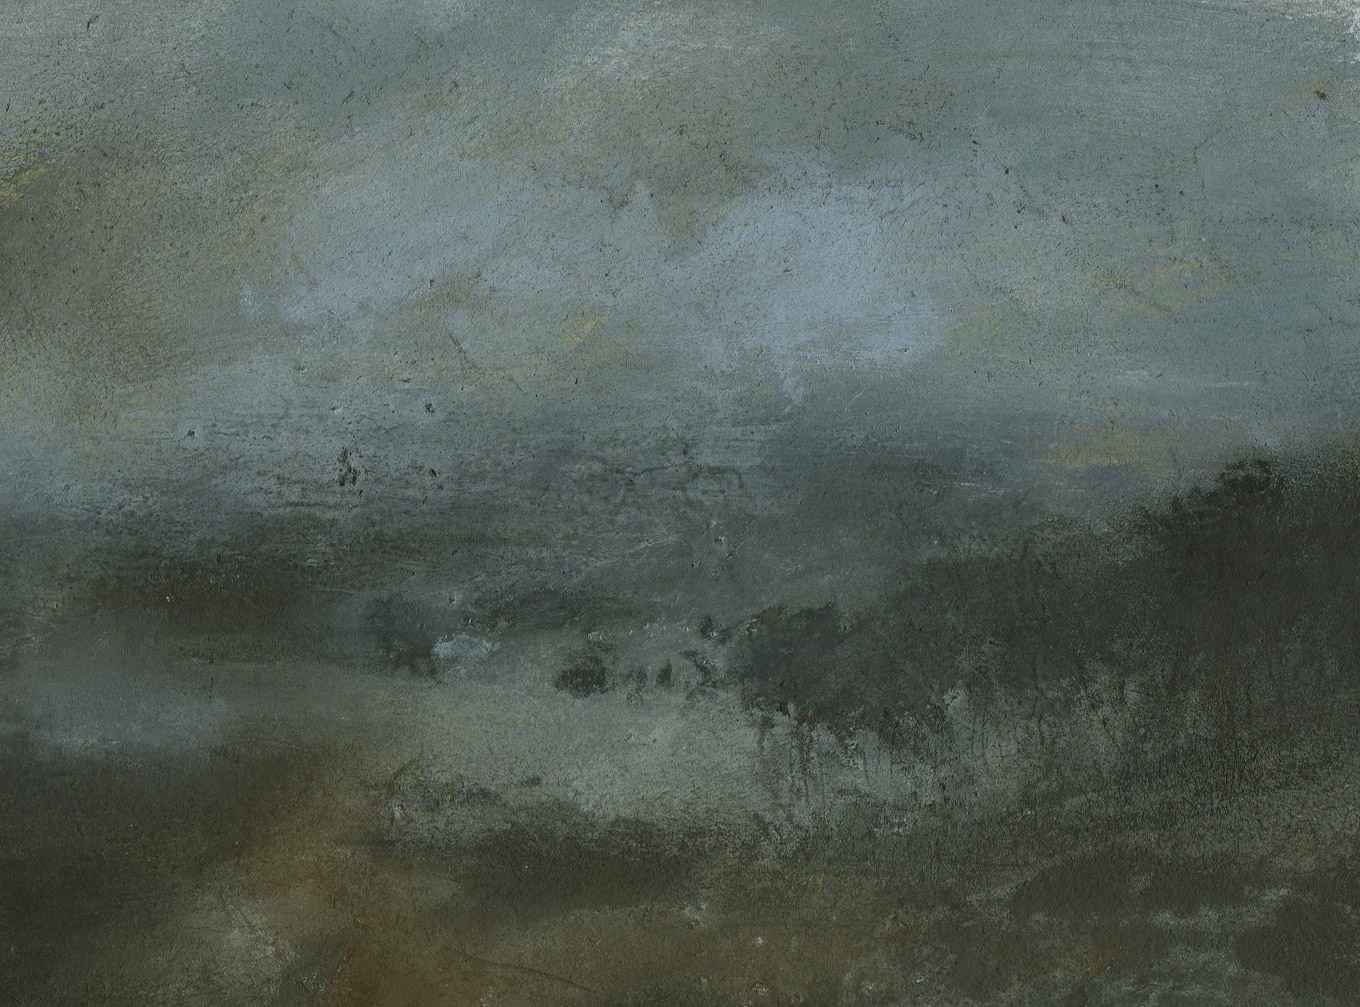 Nicholas Herbert, British Artist - Landscape L964, Sharpenhoe Series, View From the Escarpment, The Chiltern Hills, contemporary mixed media painting